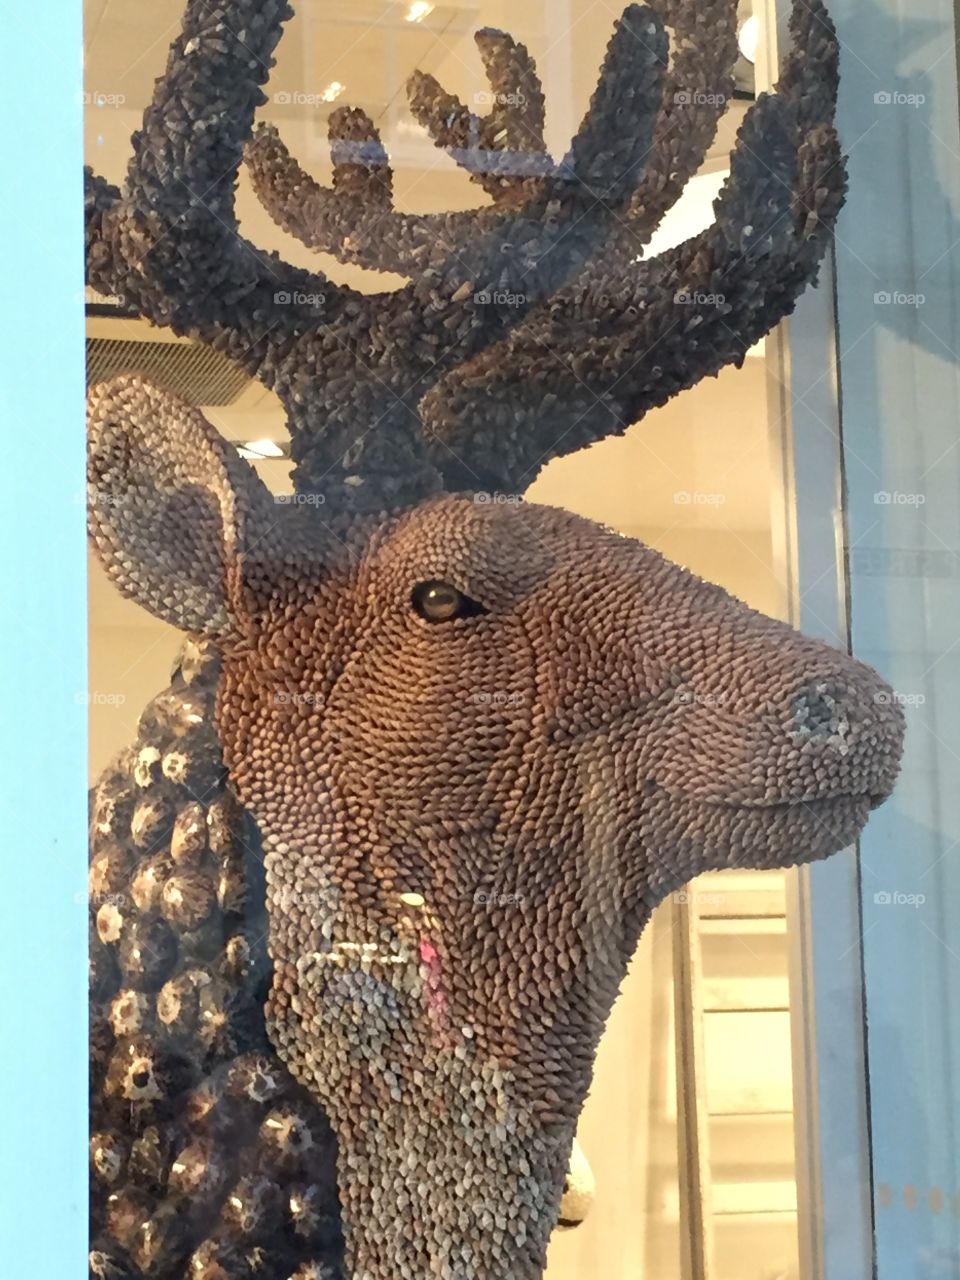 Fabulous life sized reindeer in store window in Bath - Autumn 2015